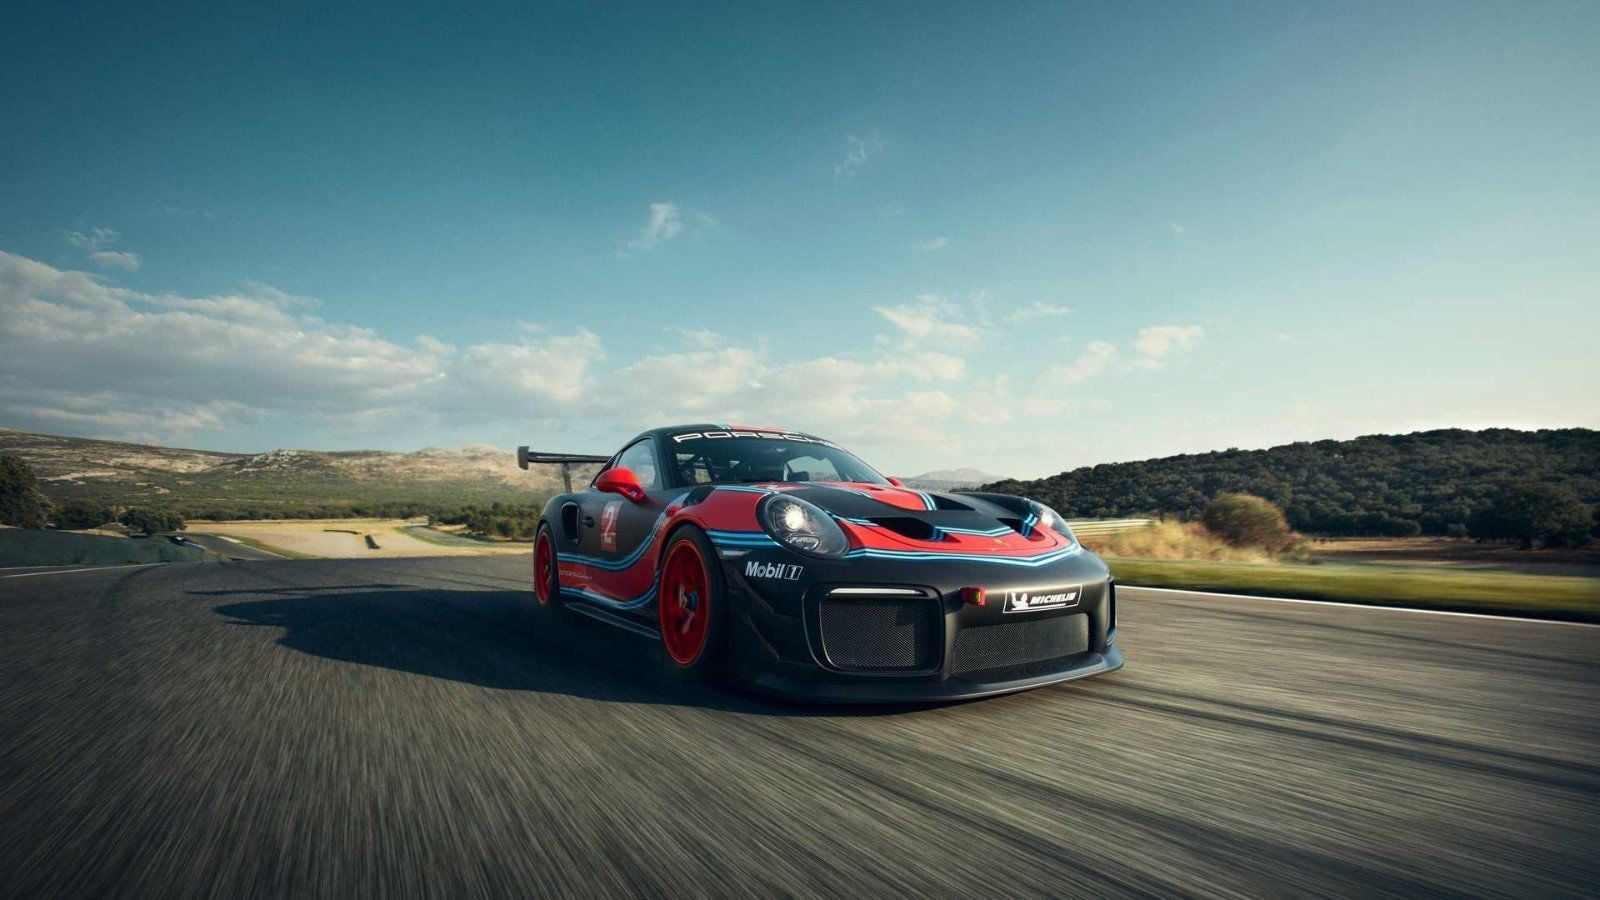 Porsche GT2 RS Clubsport in the Pinnacle of 911 Performance | 6speedonline